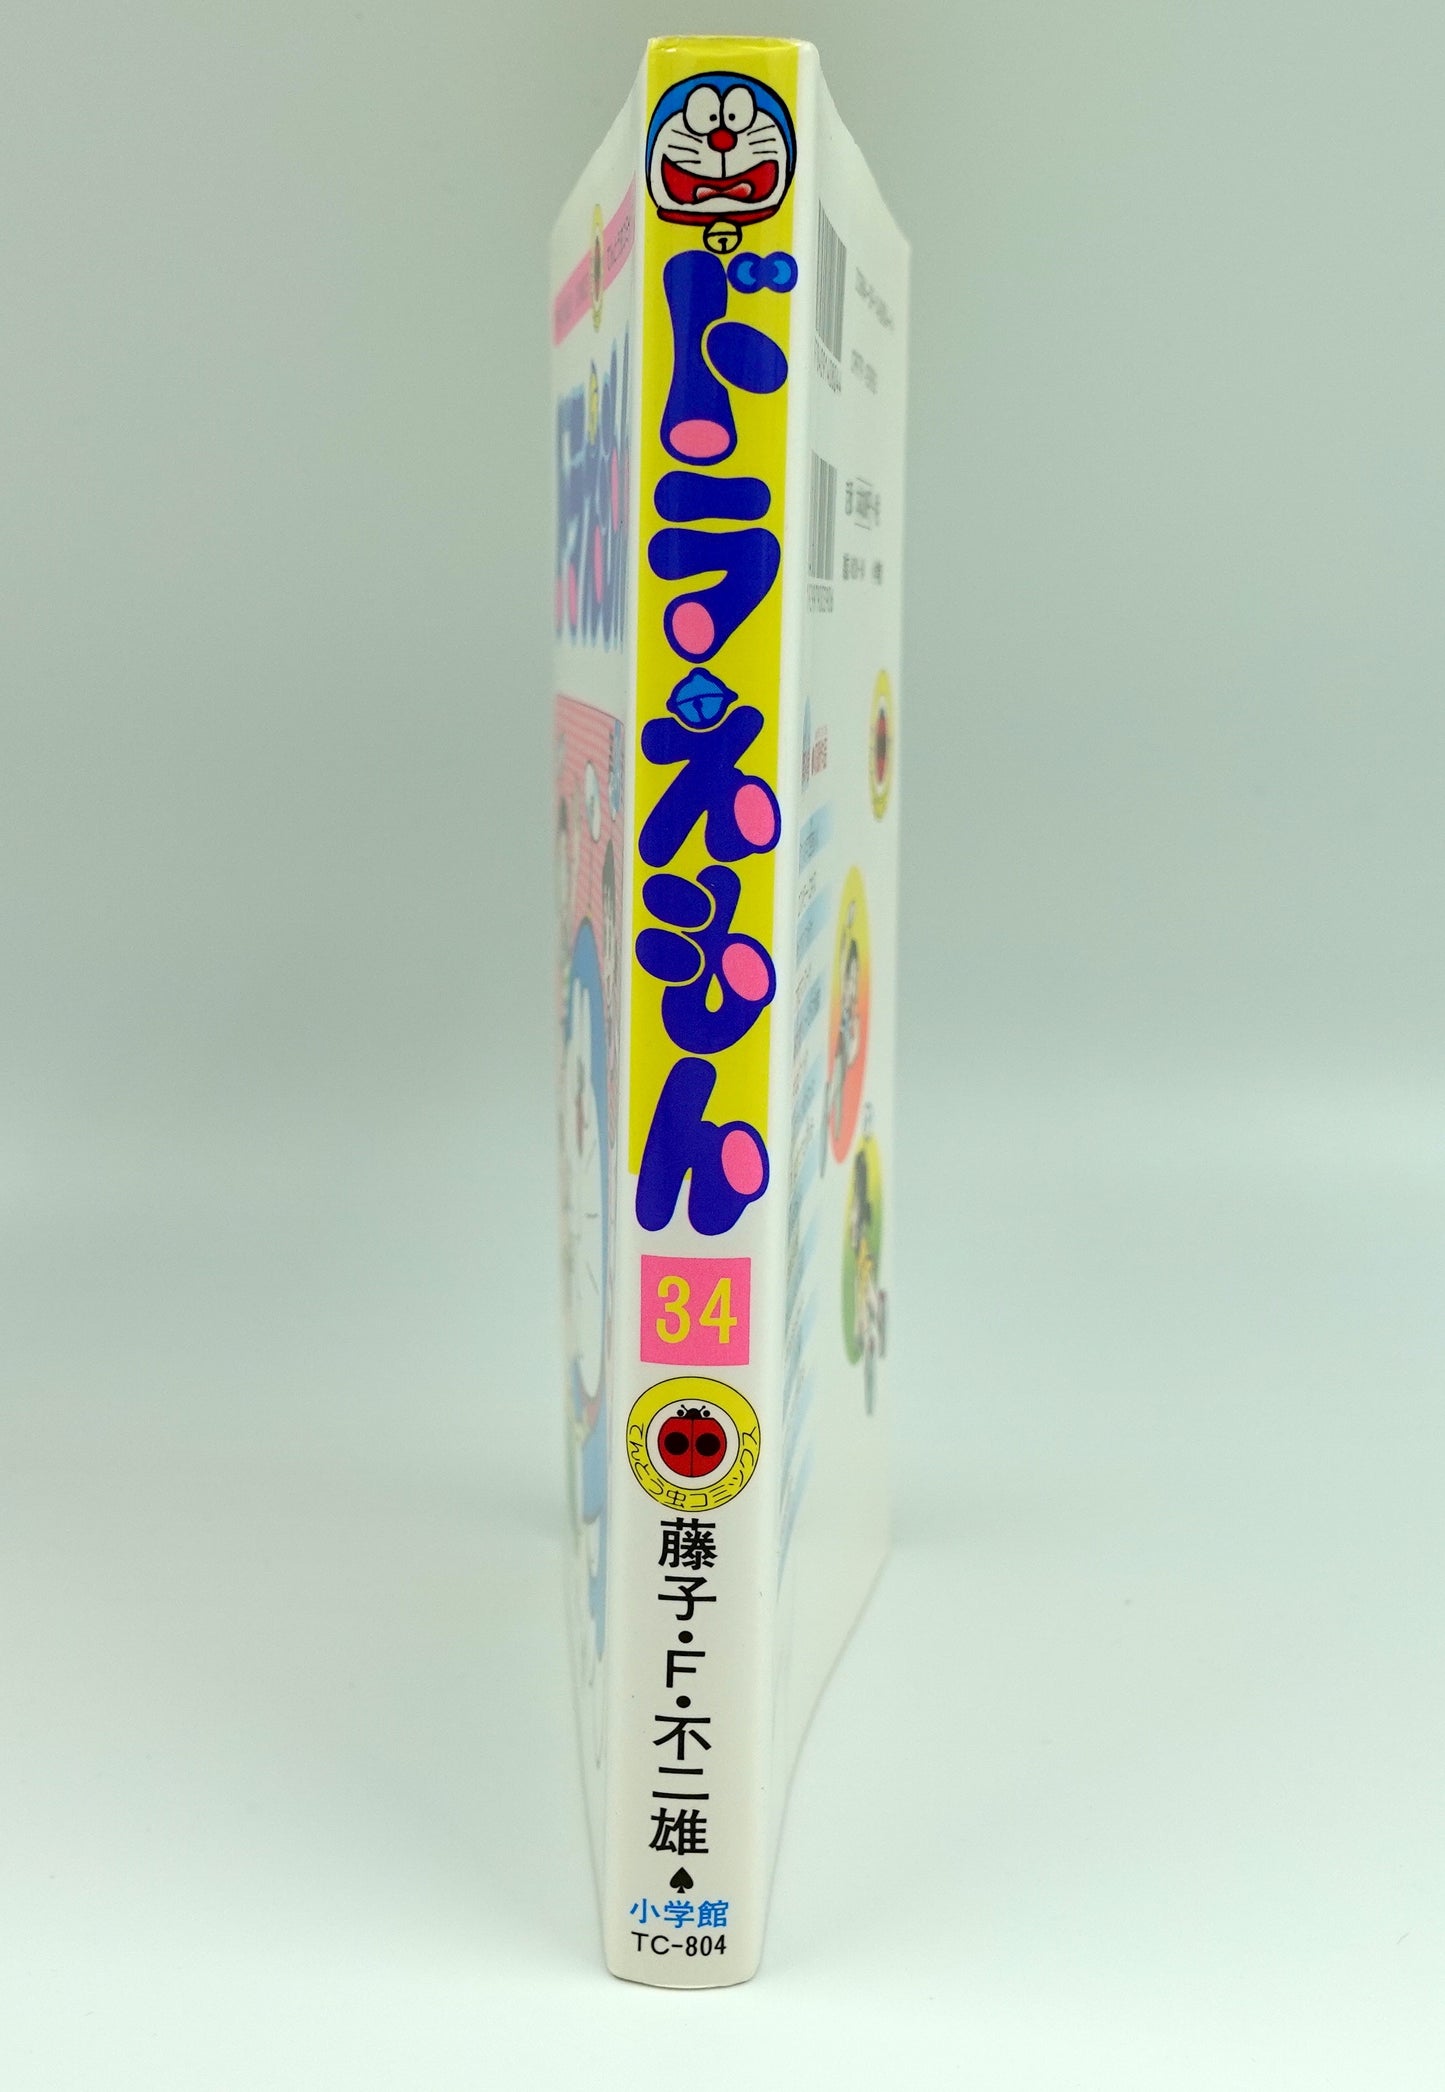 Doraemon Vol.34- Official Japanese Edition